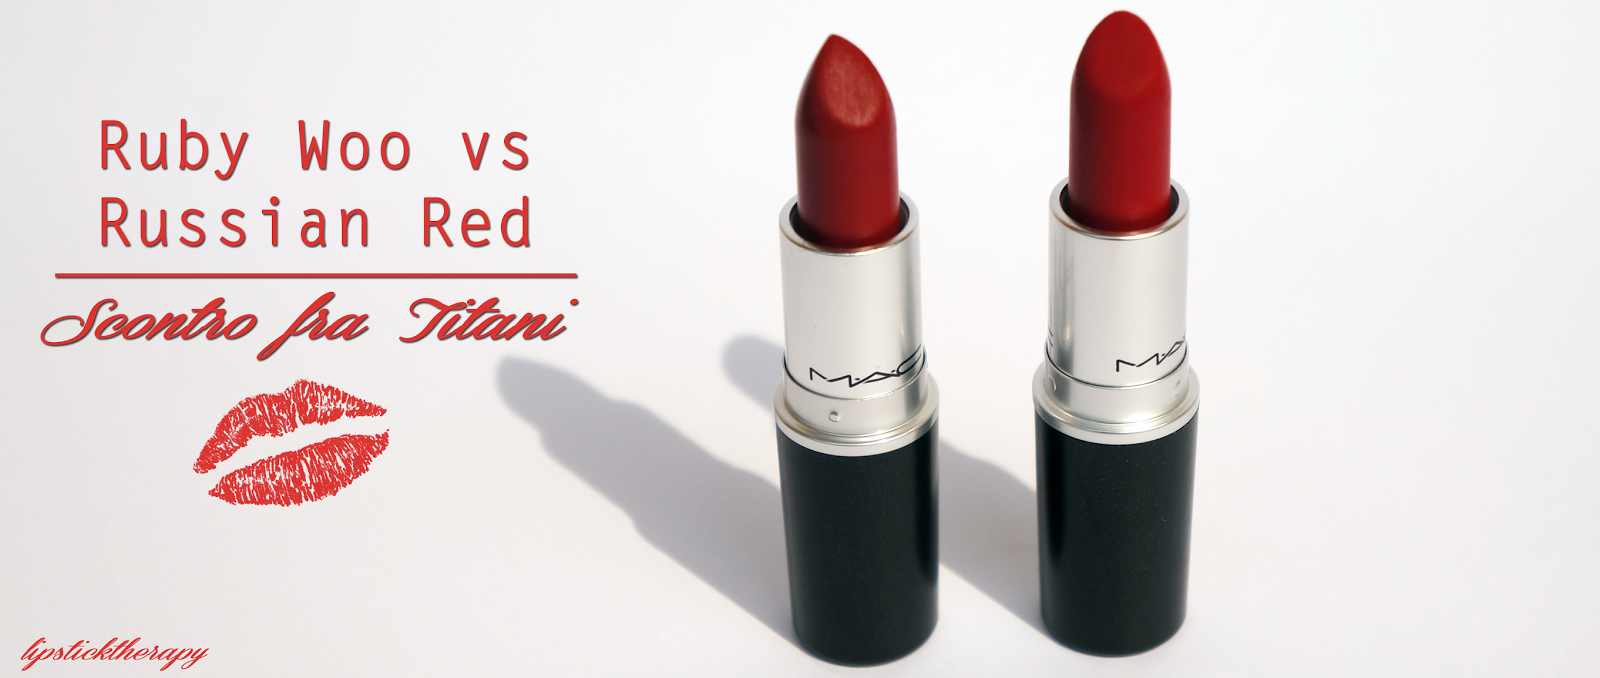 Lipstick Therapy Ruby Woo Vs Russian Red Scontro Fra Titani